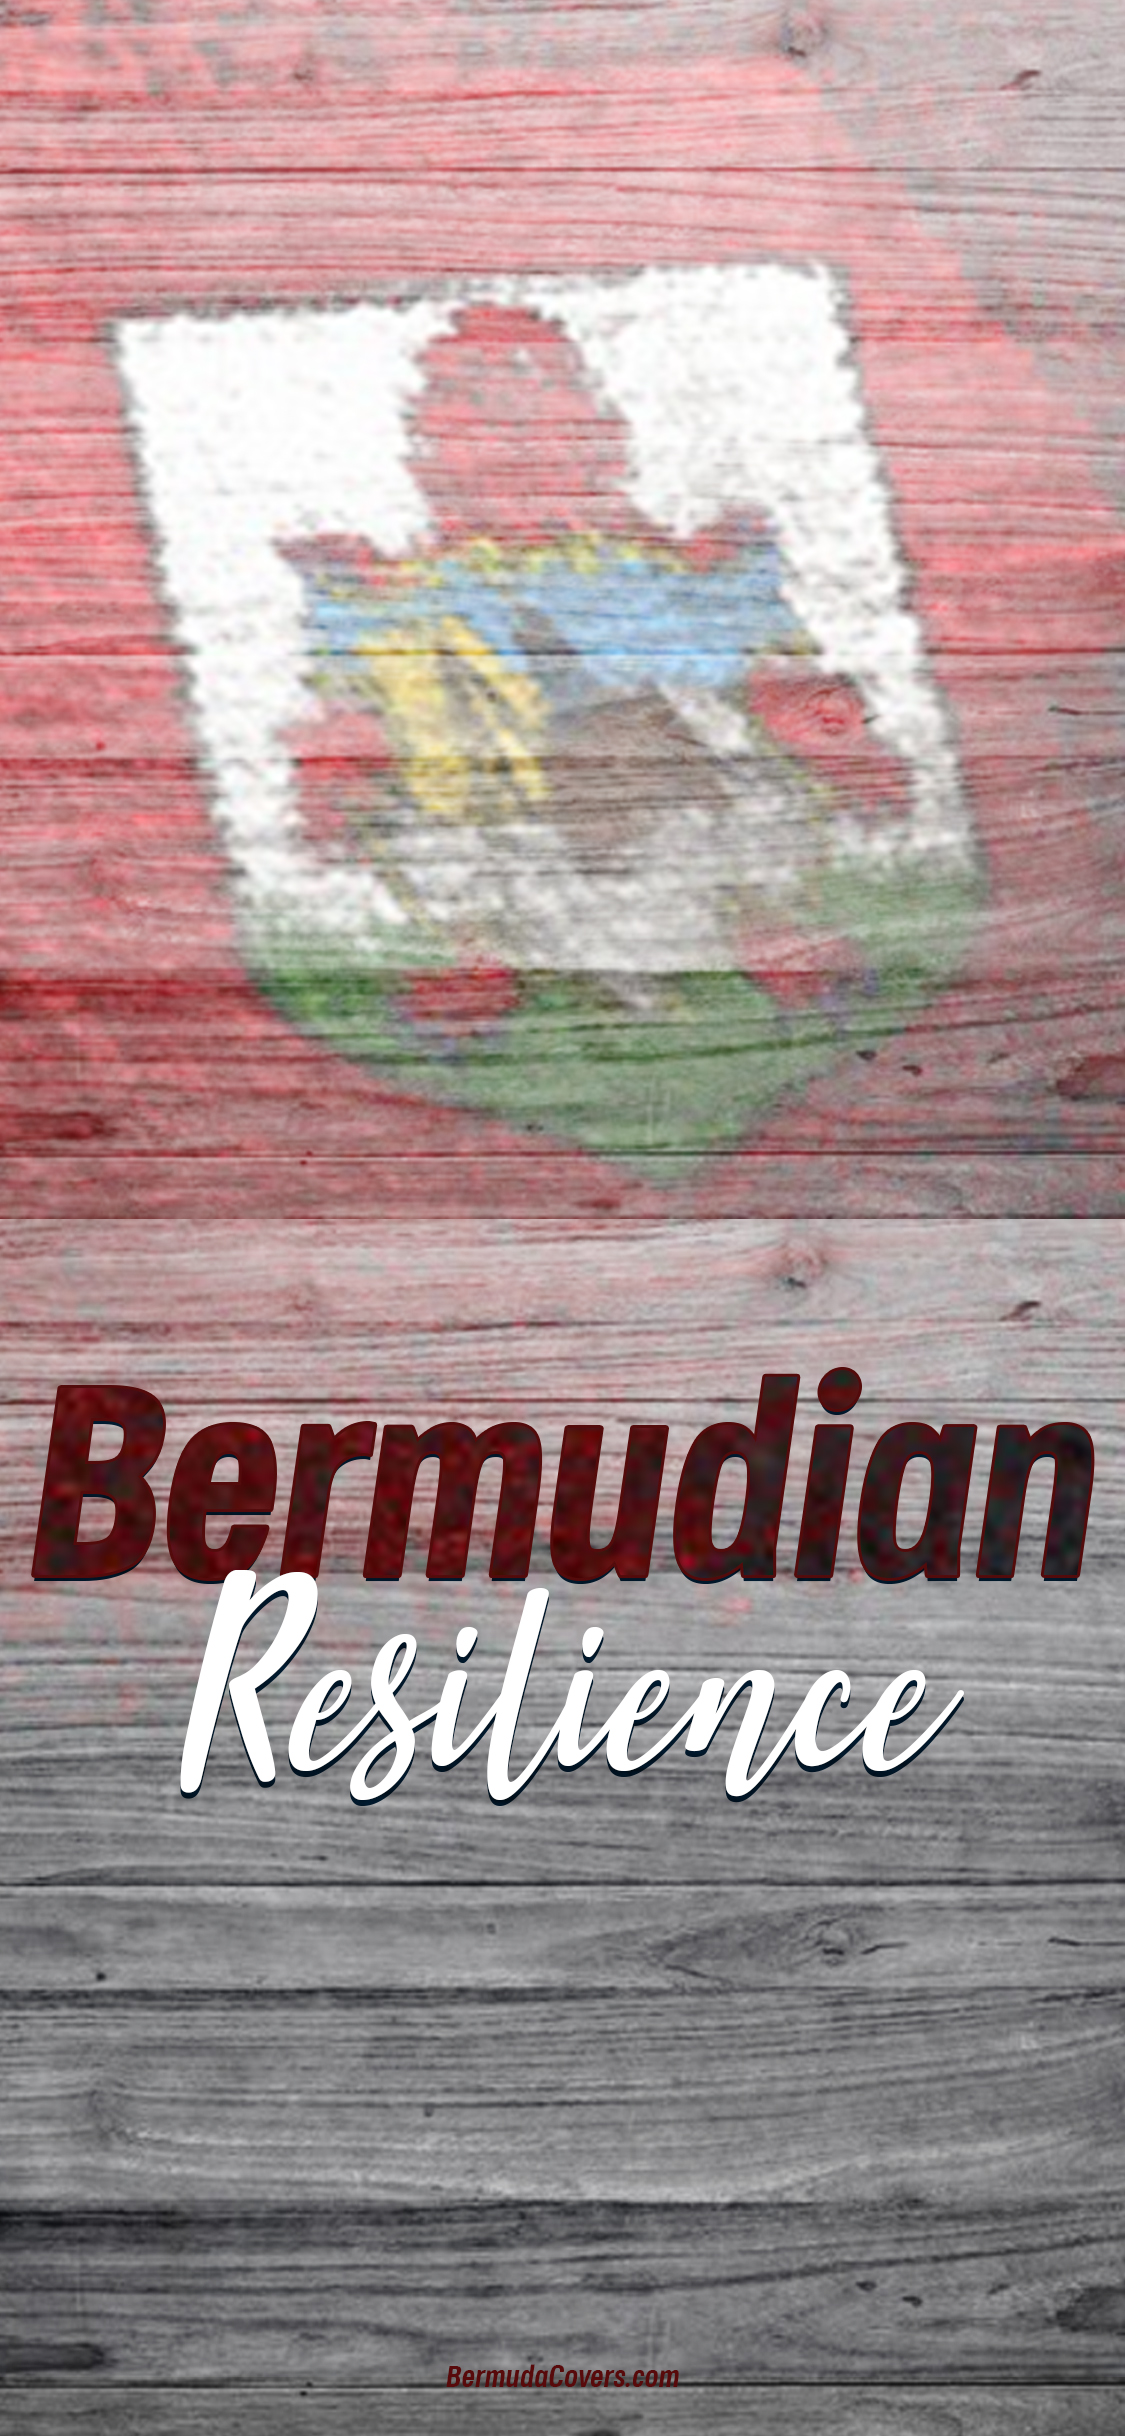 Wallpaper Wednesday: 'Bermudian Resilience'